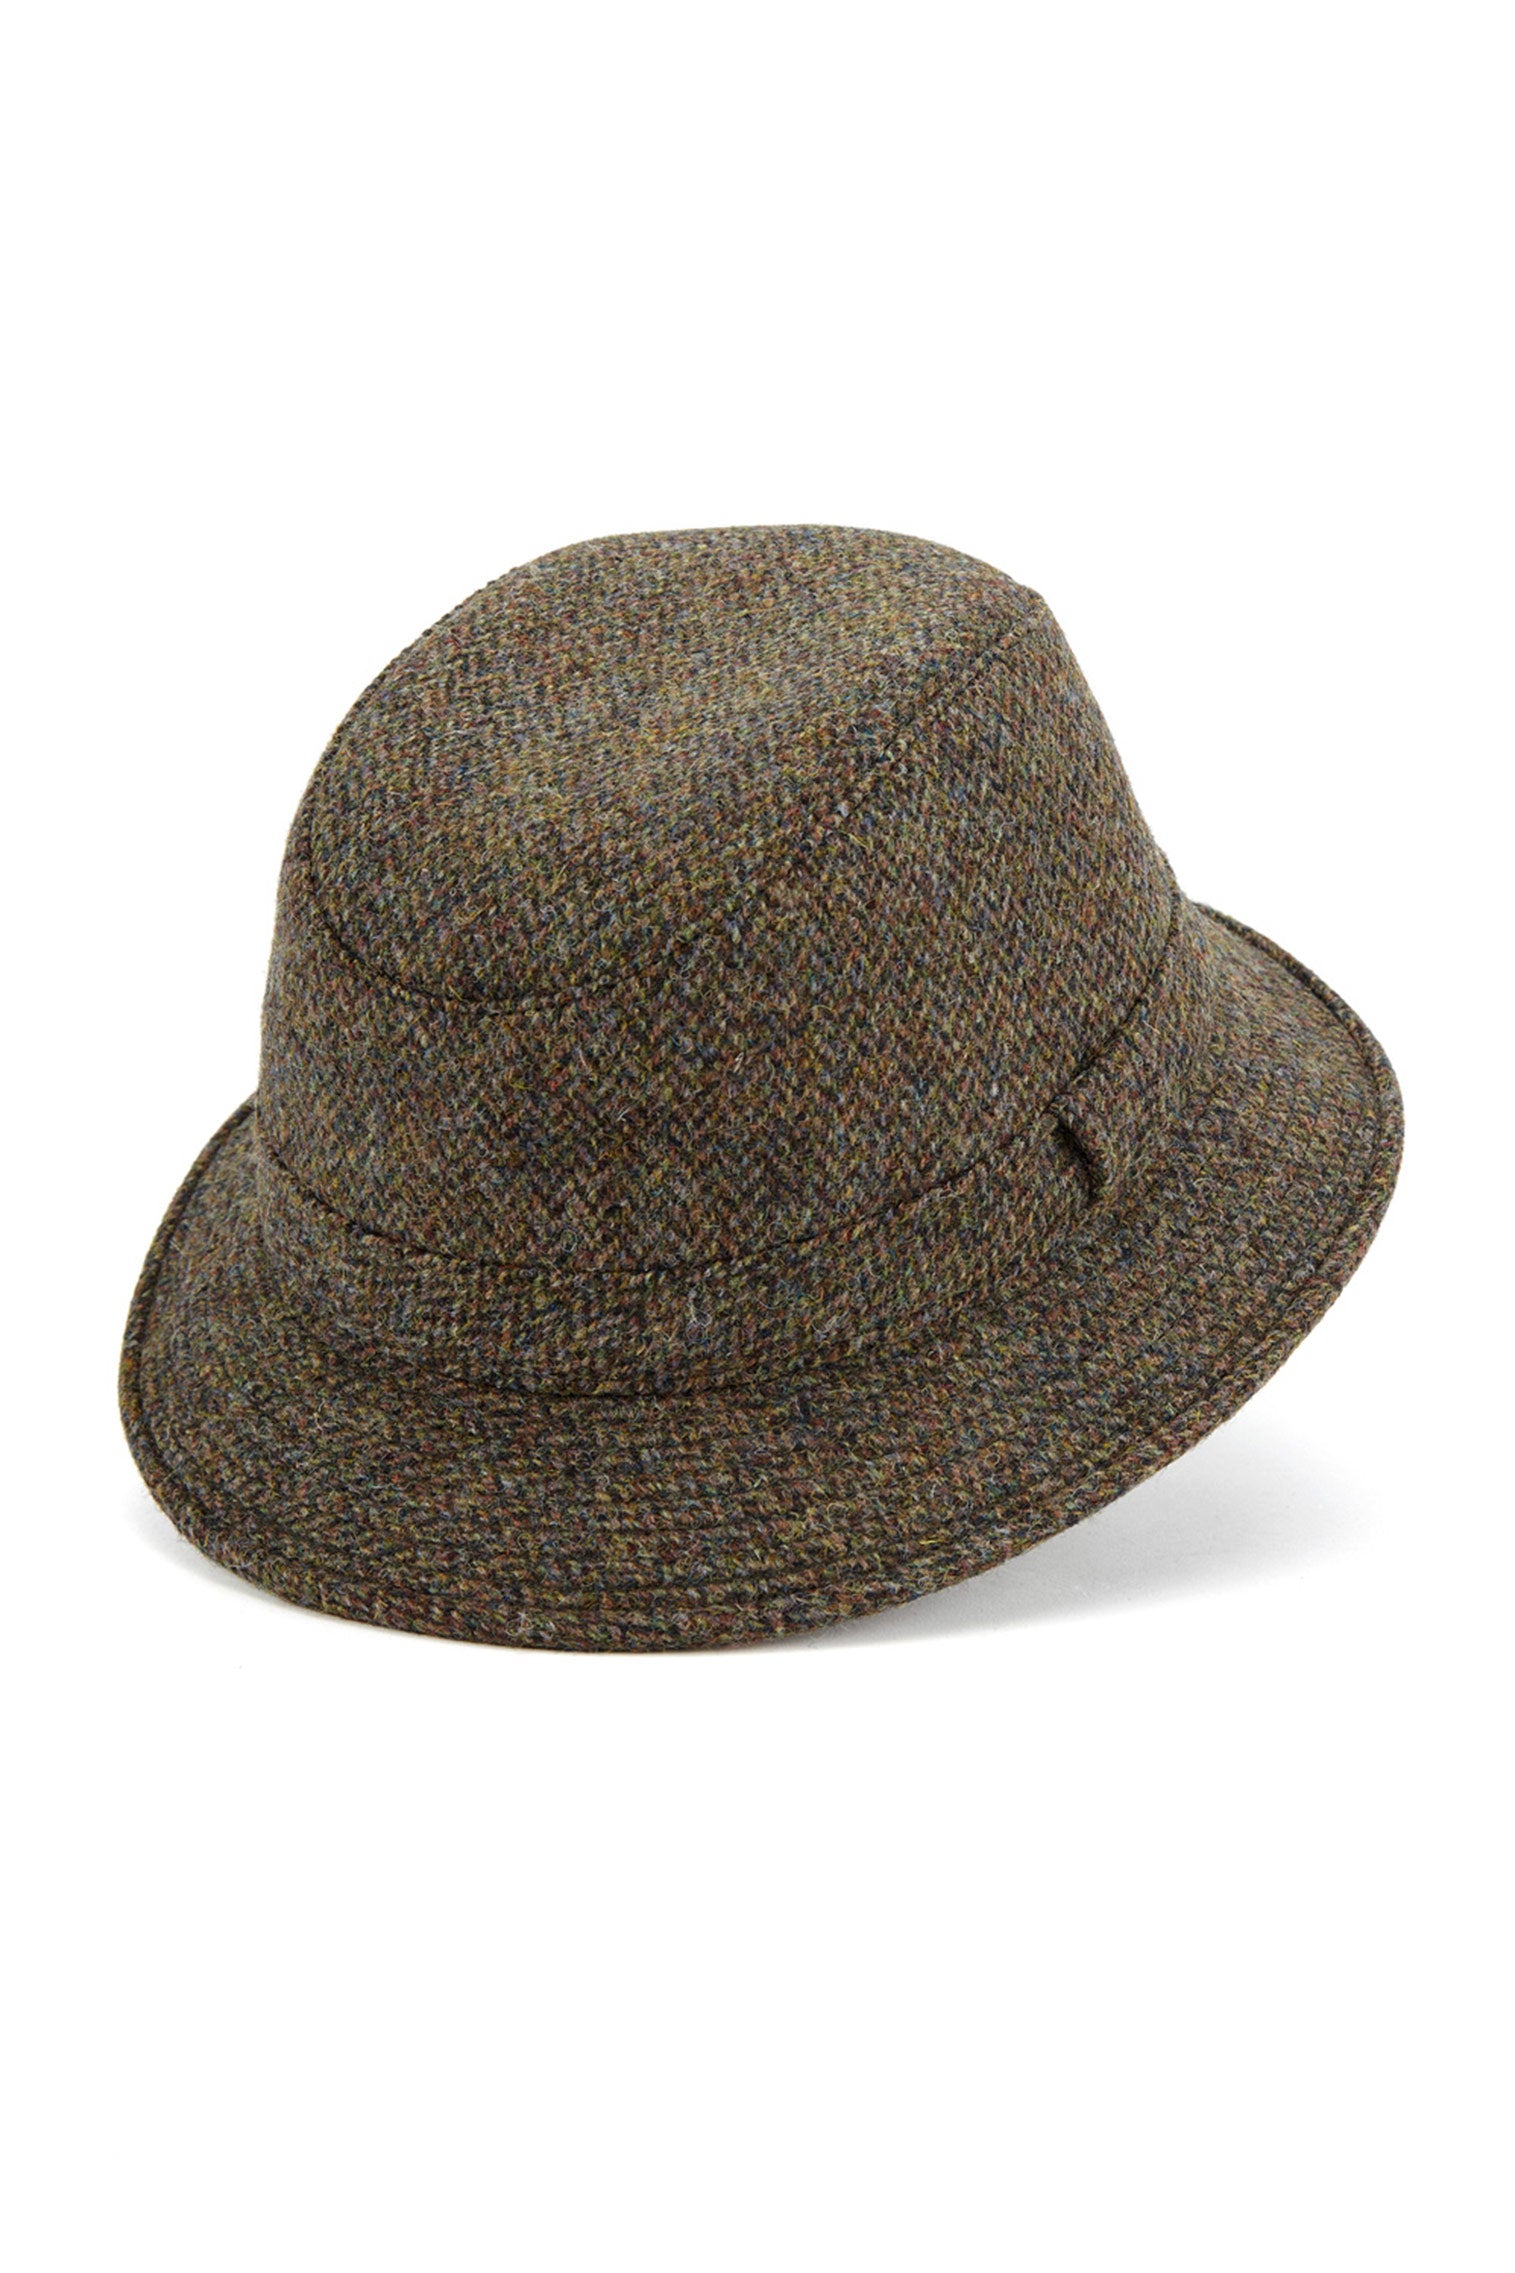 Grouse Tweed Rollable Hat - Bucket Hats - Lock & Co. Hatters London UK